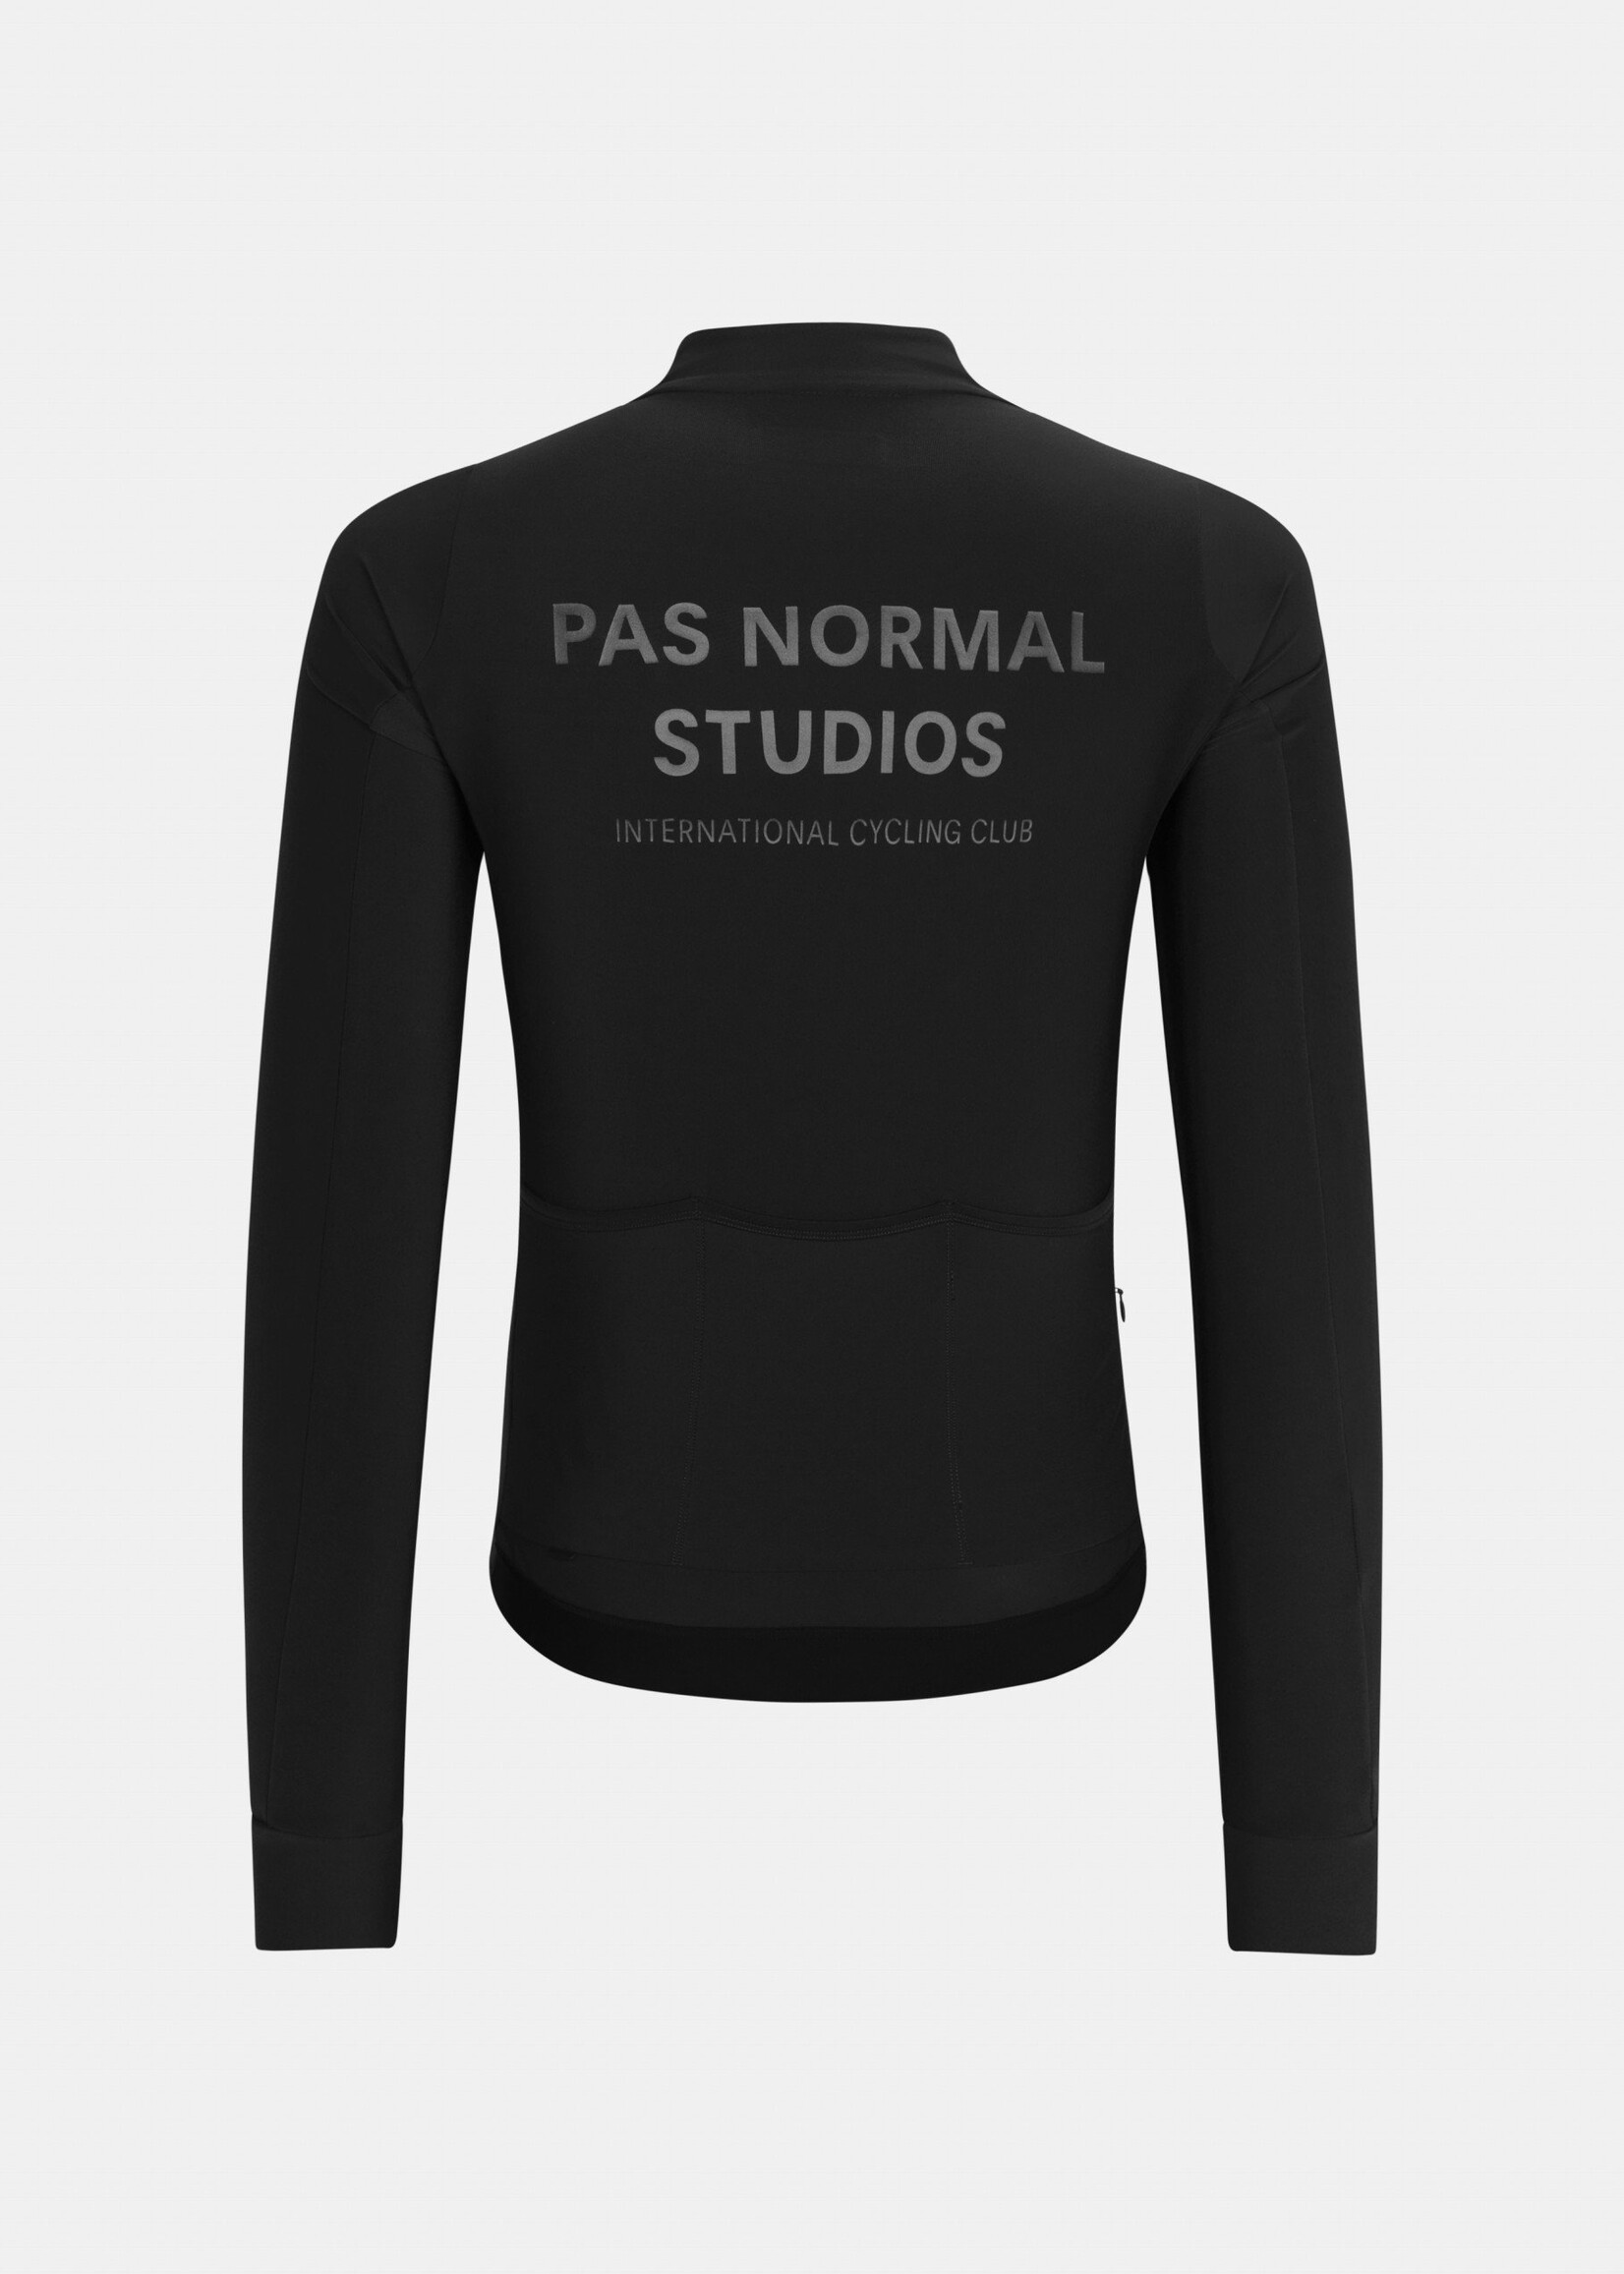 Pas Normal Studios Mechanism Thermal Long Sleeve Jersey - Black